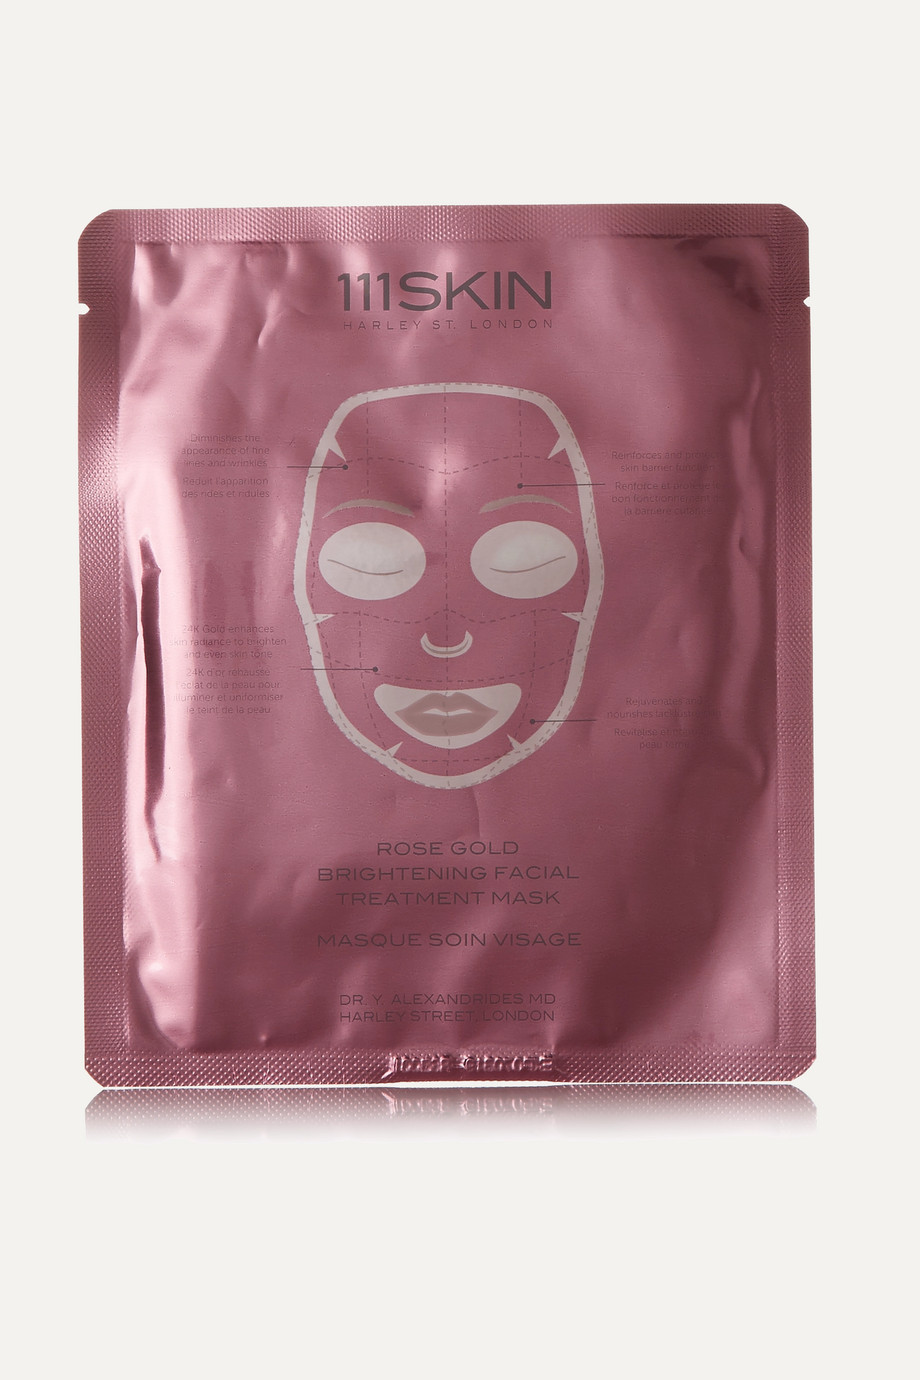 111SKIN, Rose Gold Brightening Facial Treatment Mask